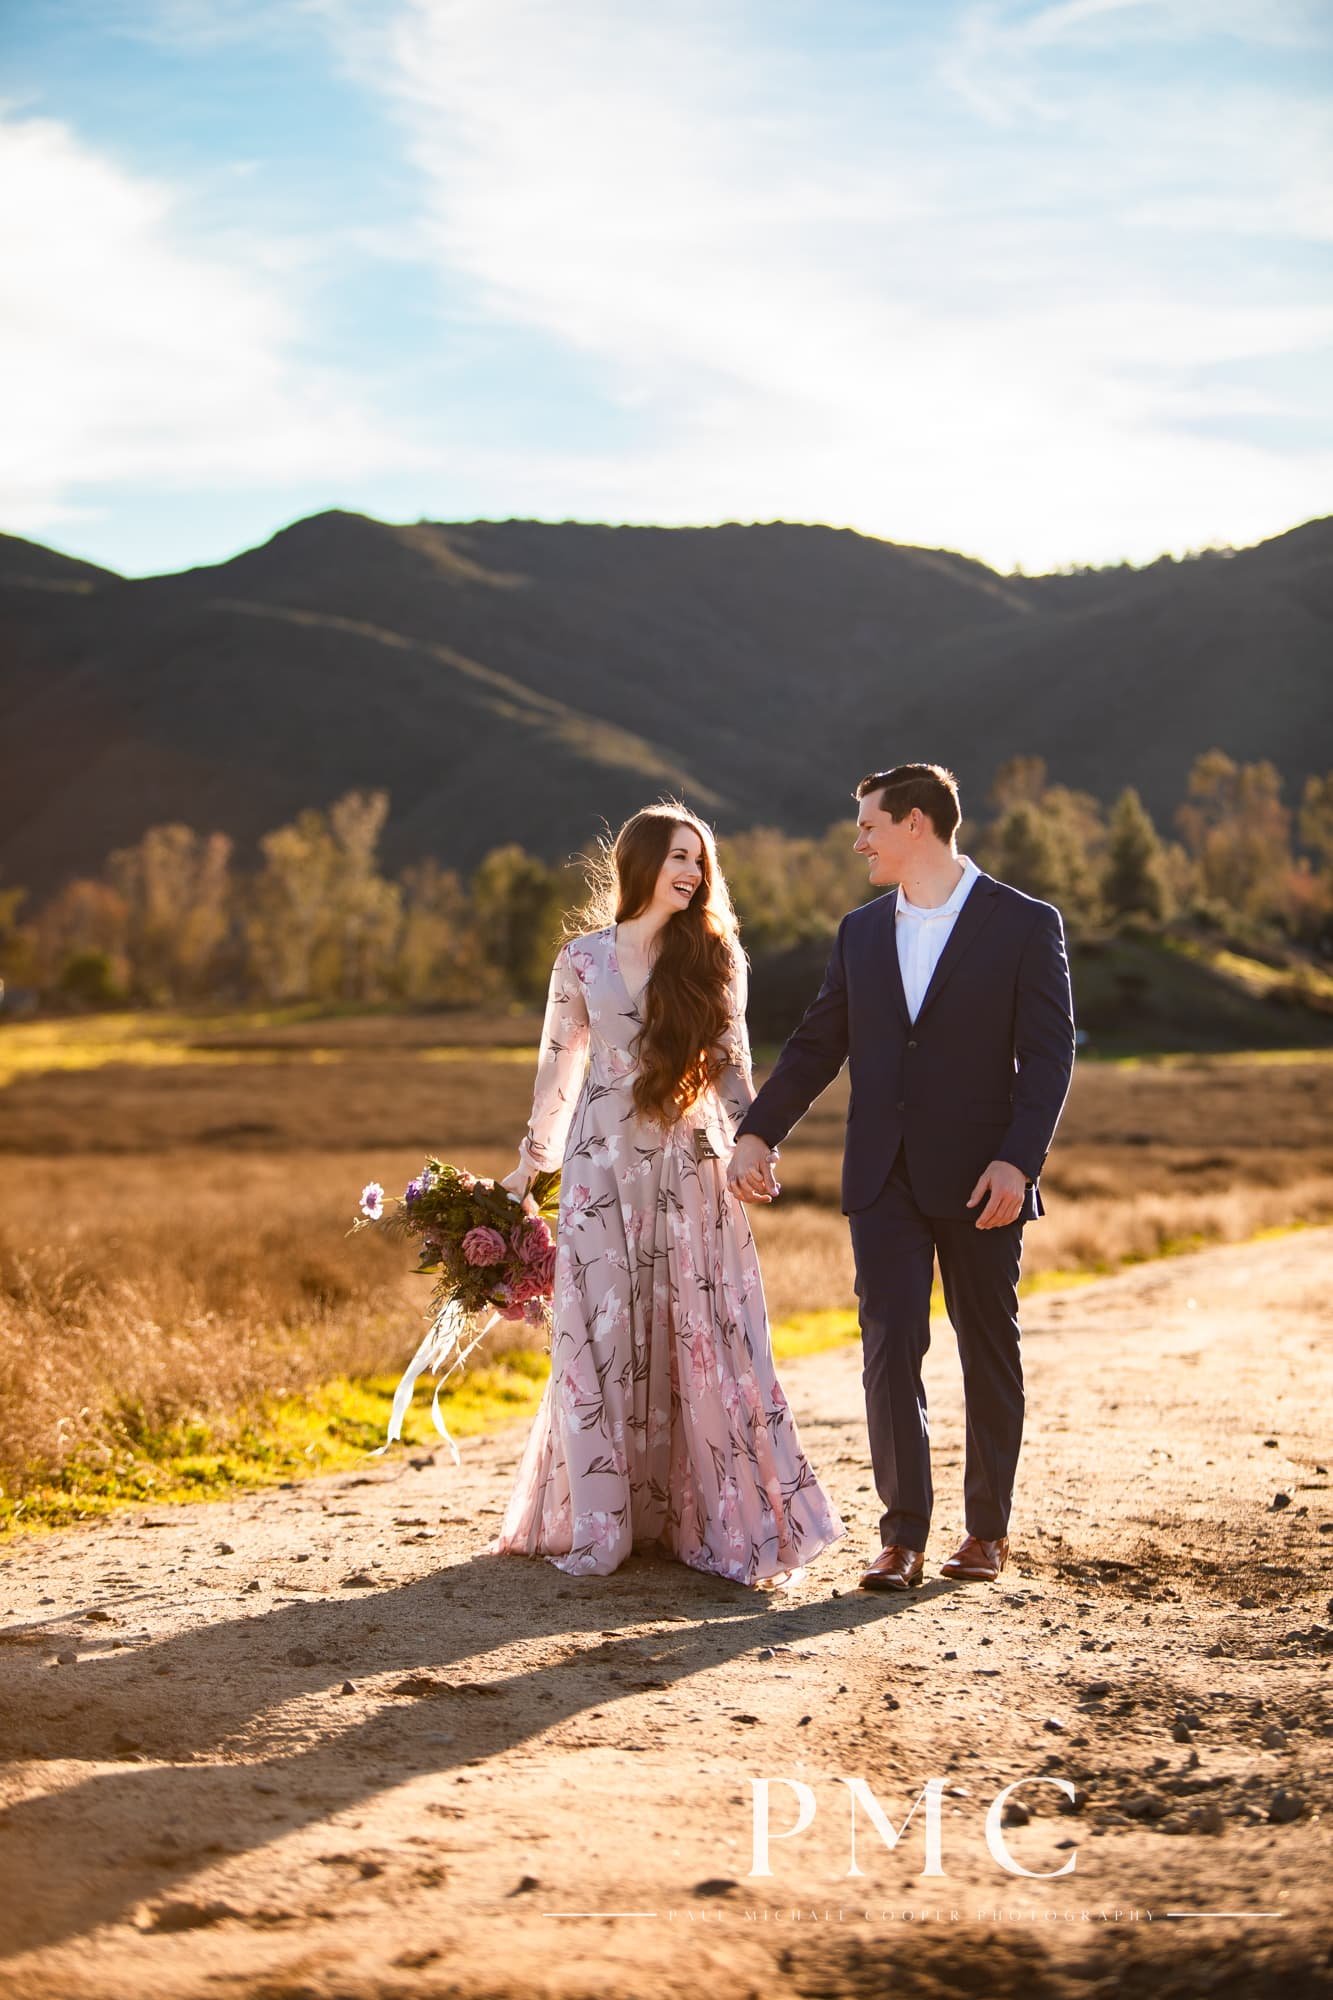 Purple Dusty Romance Engagement Session - Murrieta - Best San Diego Wedding Photographer-4.jpg